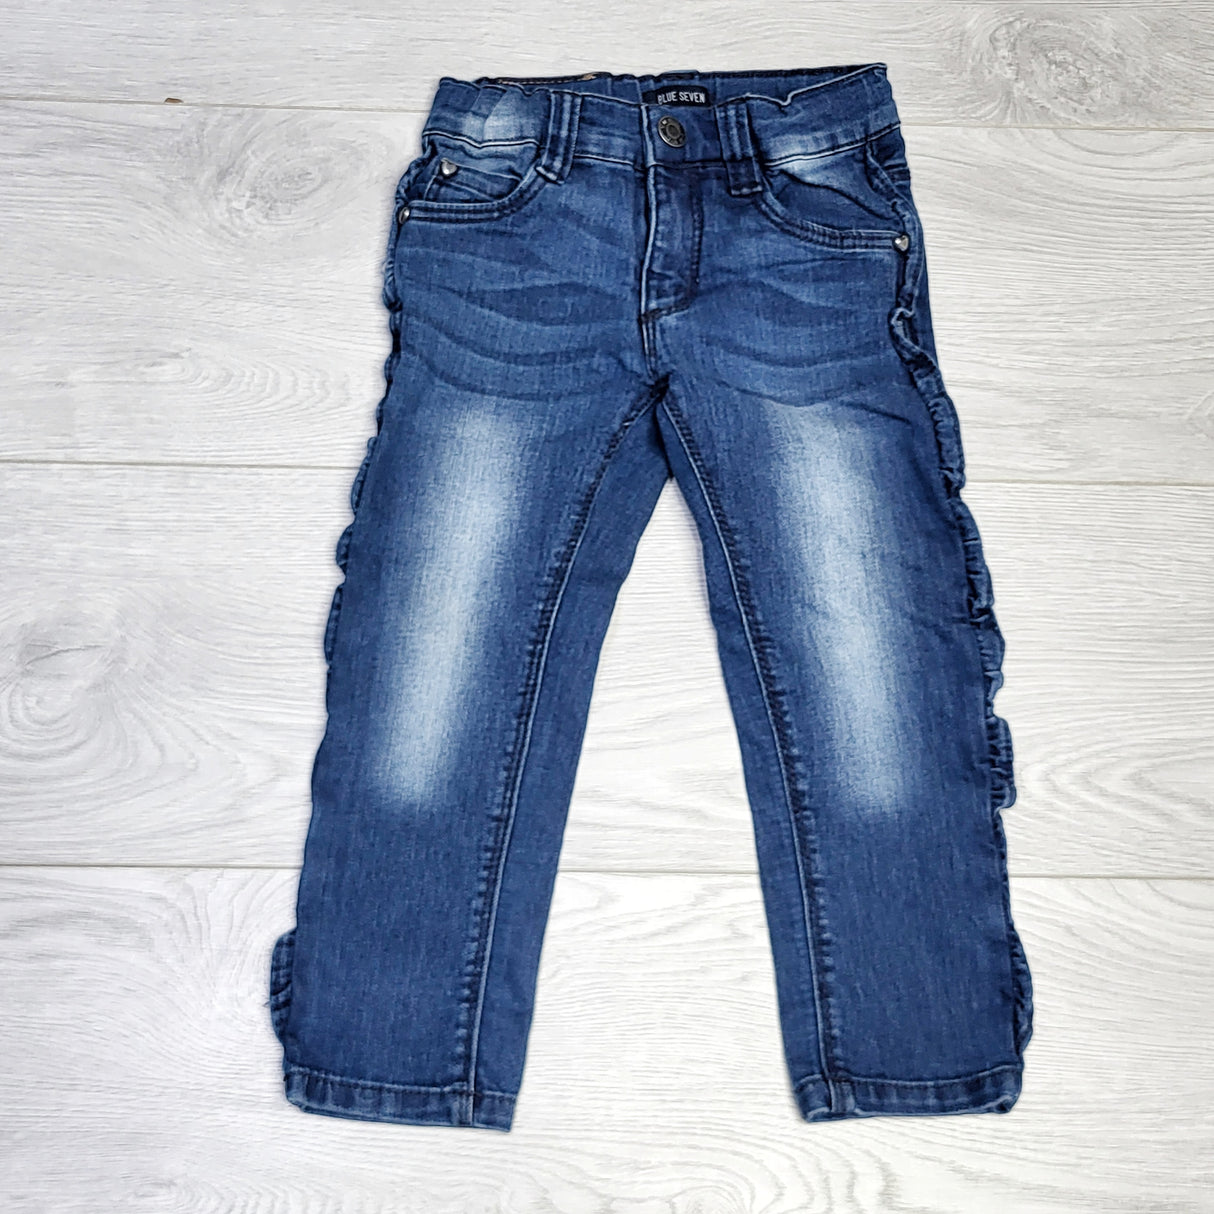 KJHN1 - Blue Seven distressed jeans with side ruffles. Size 2T